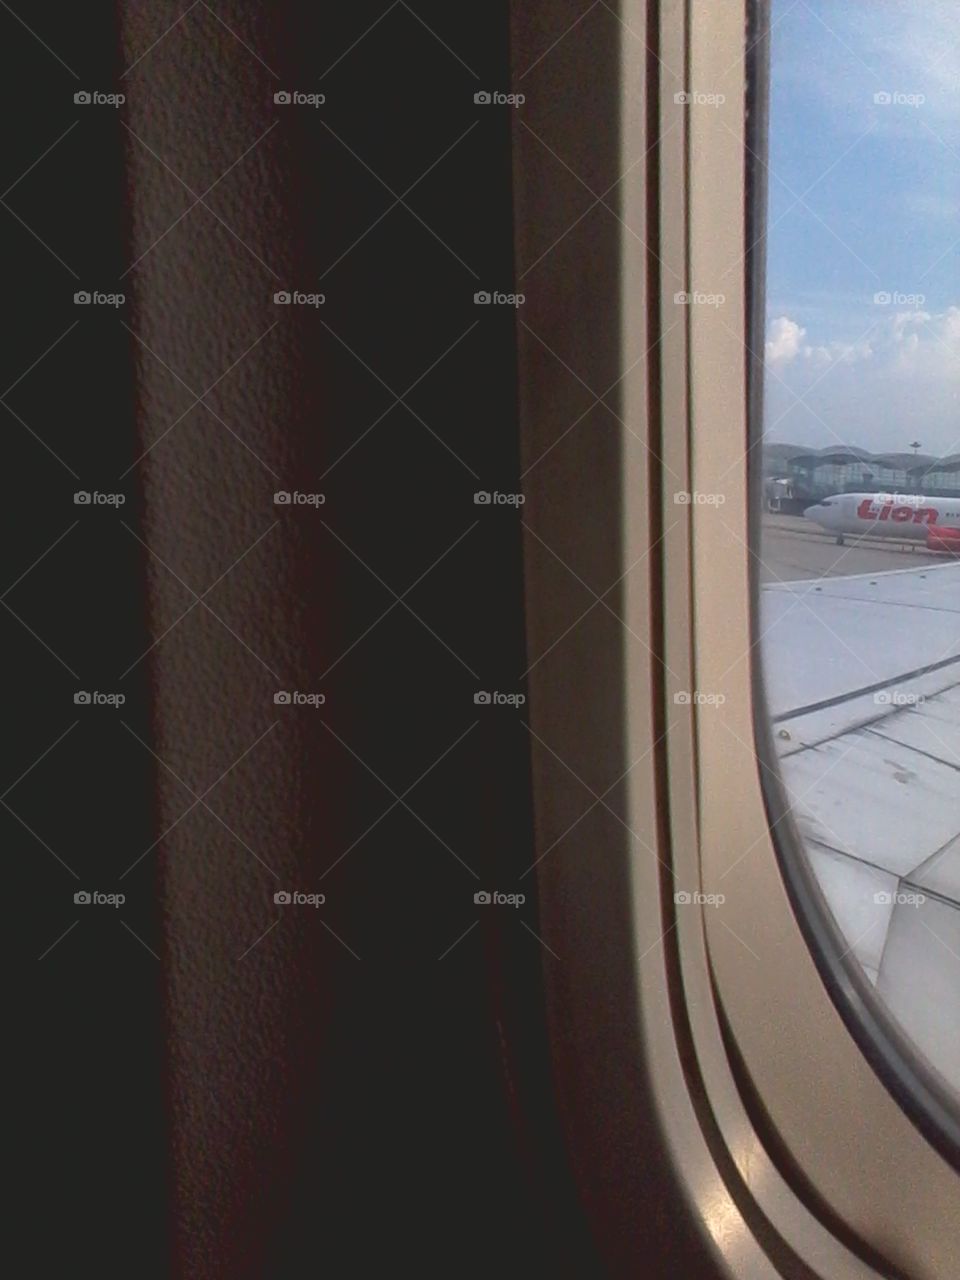 jendela pesawat